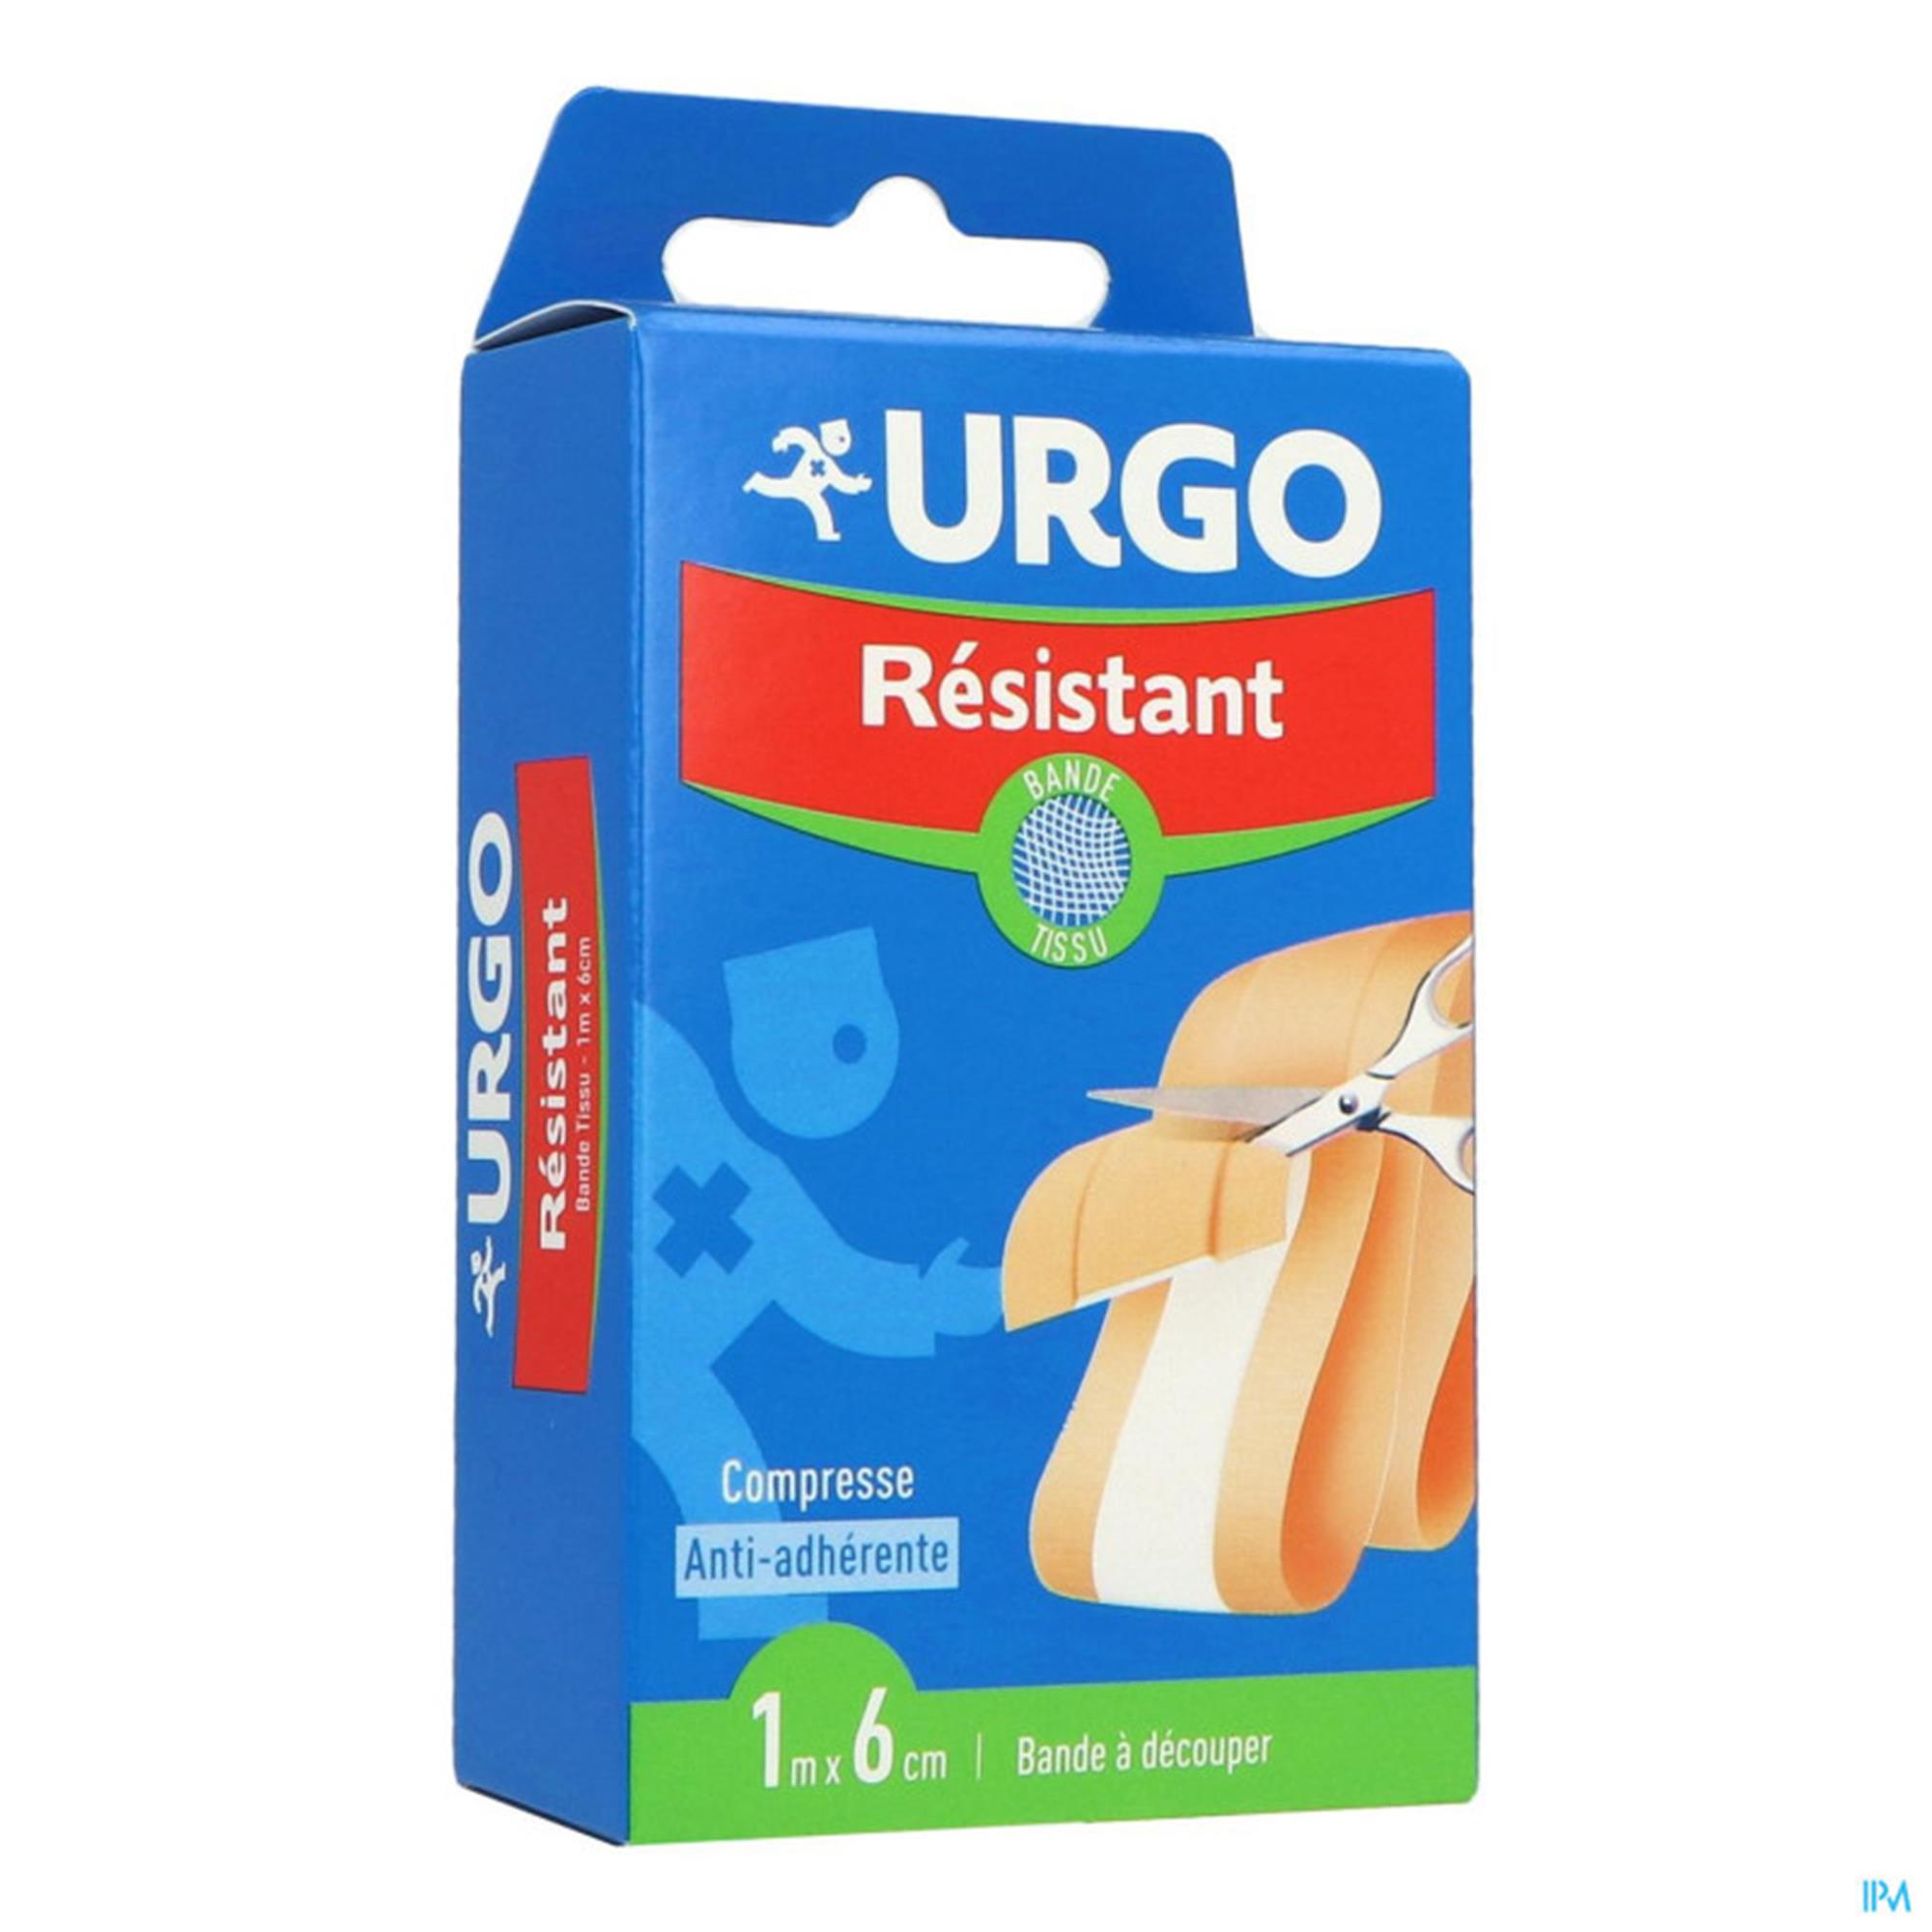 URGO - PANSEMENTS [RESISTANT] [1MX6CM]